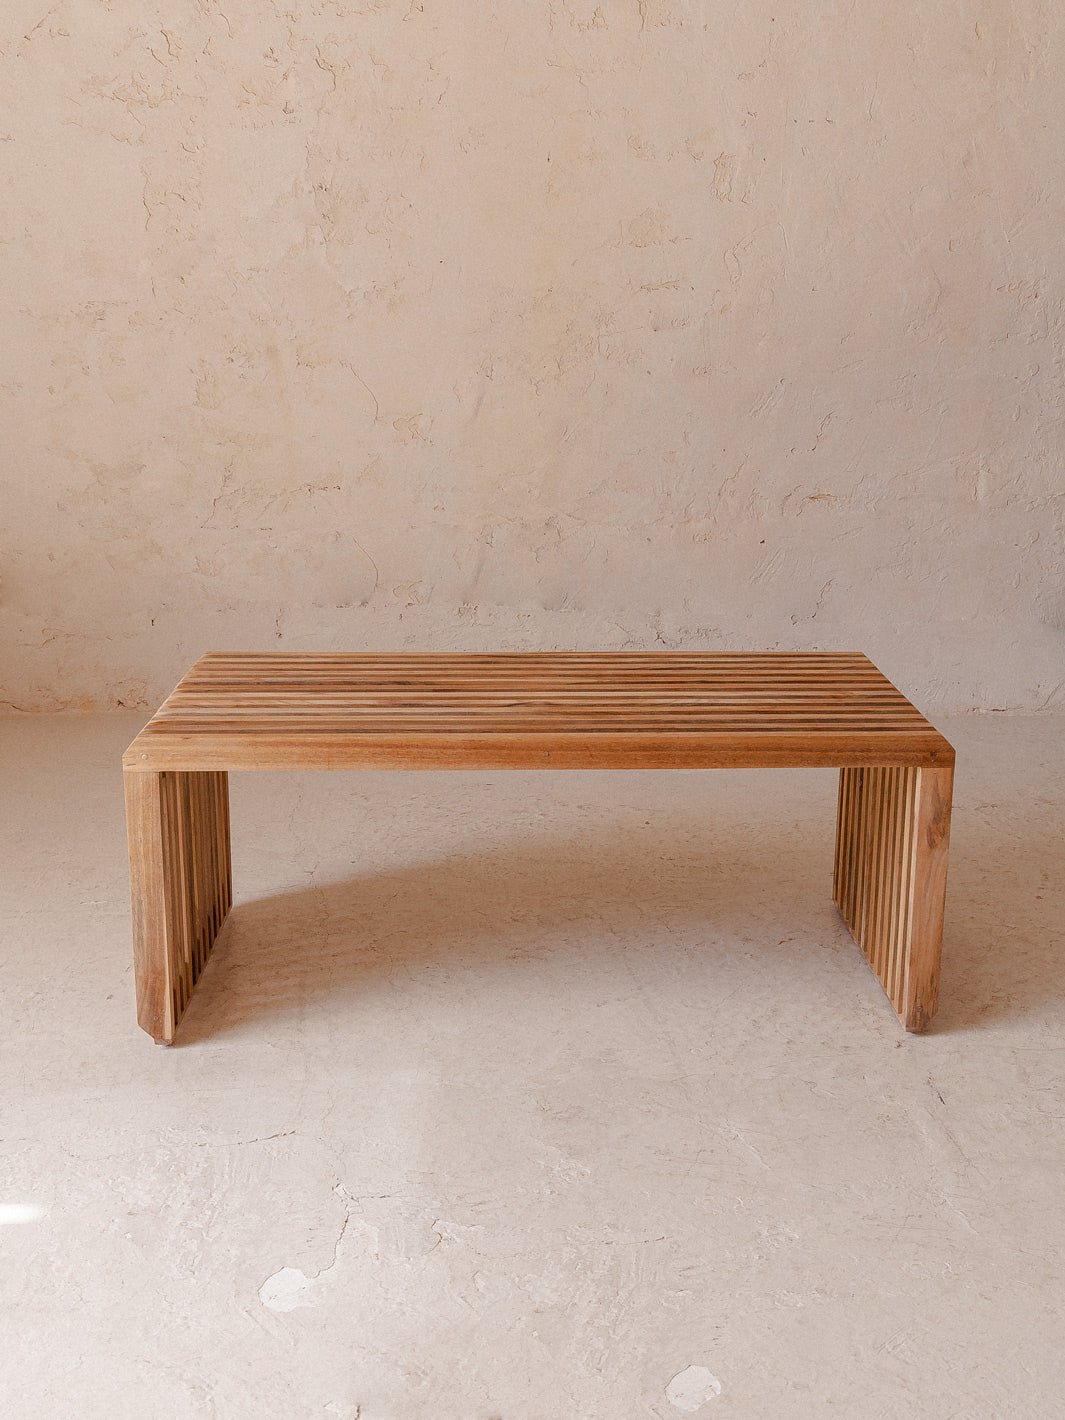 Teak wood bench 96cm